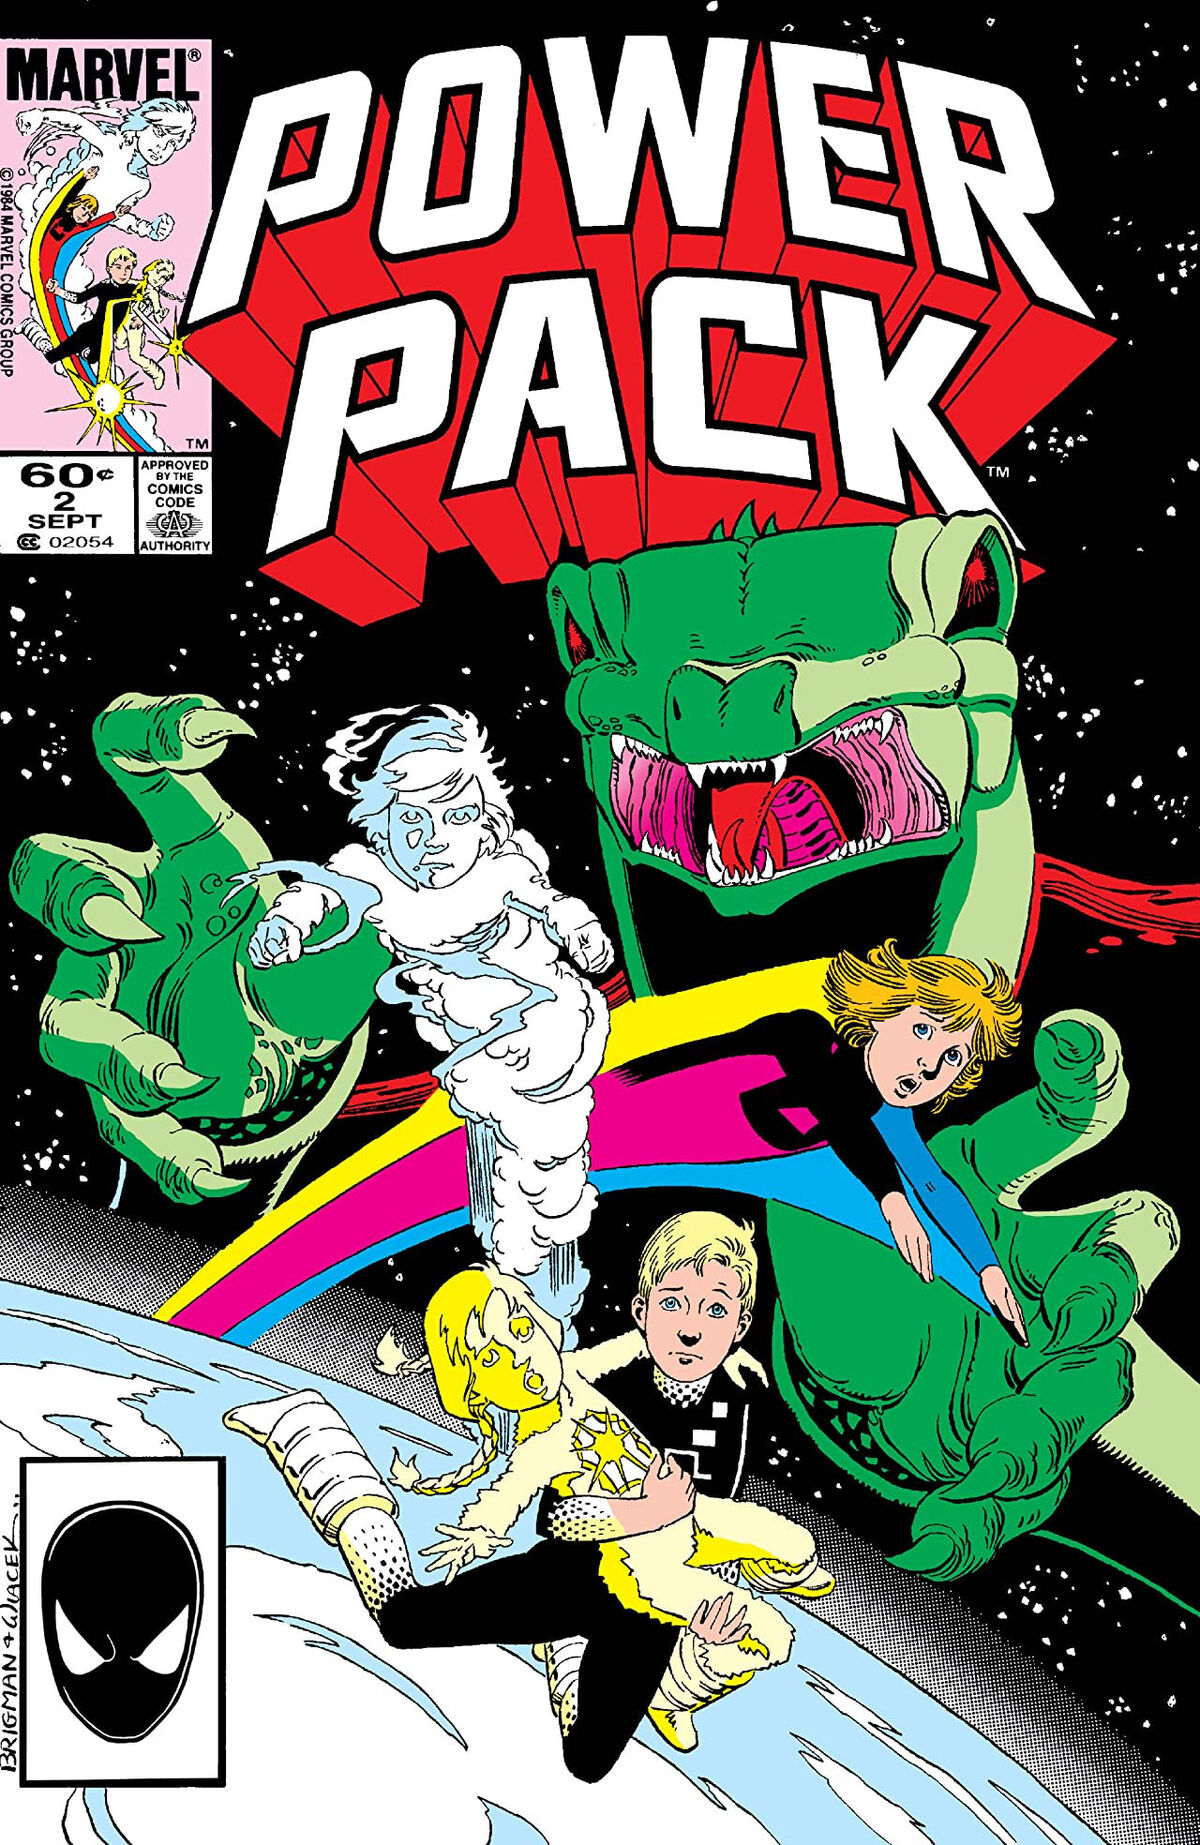 A Power Packing комикс. Power Pack Marvel. Пауэр читает. Power pack комикс